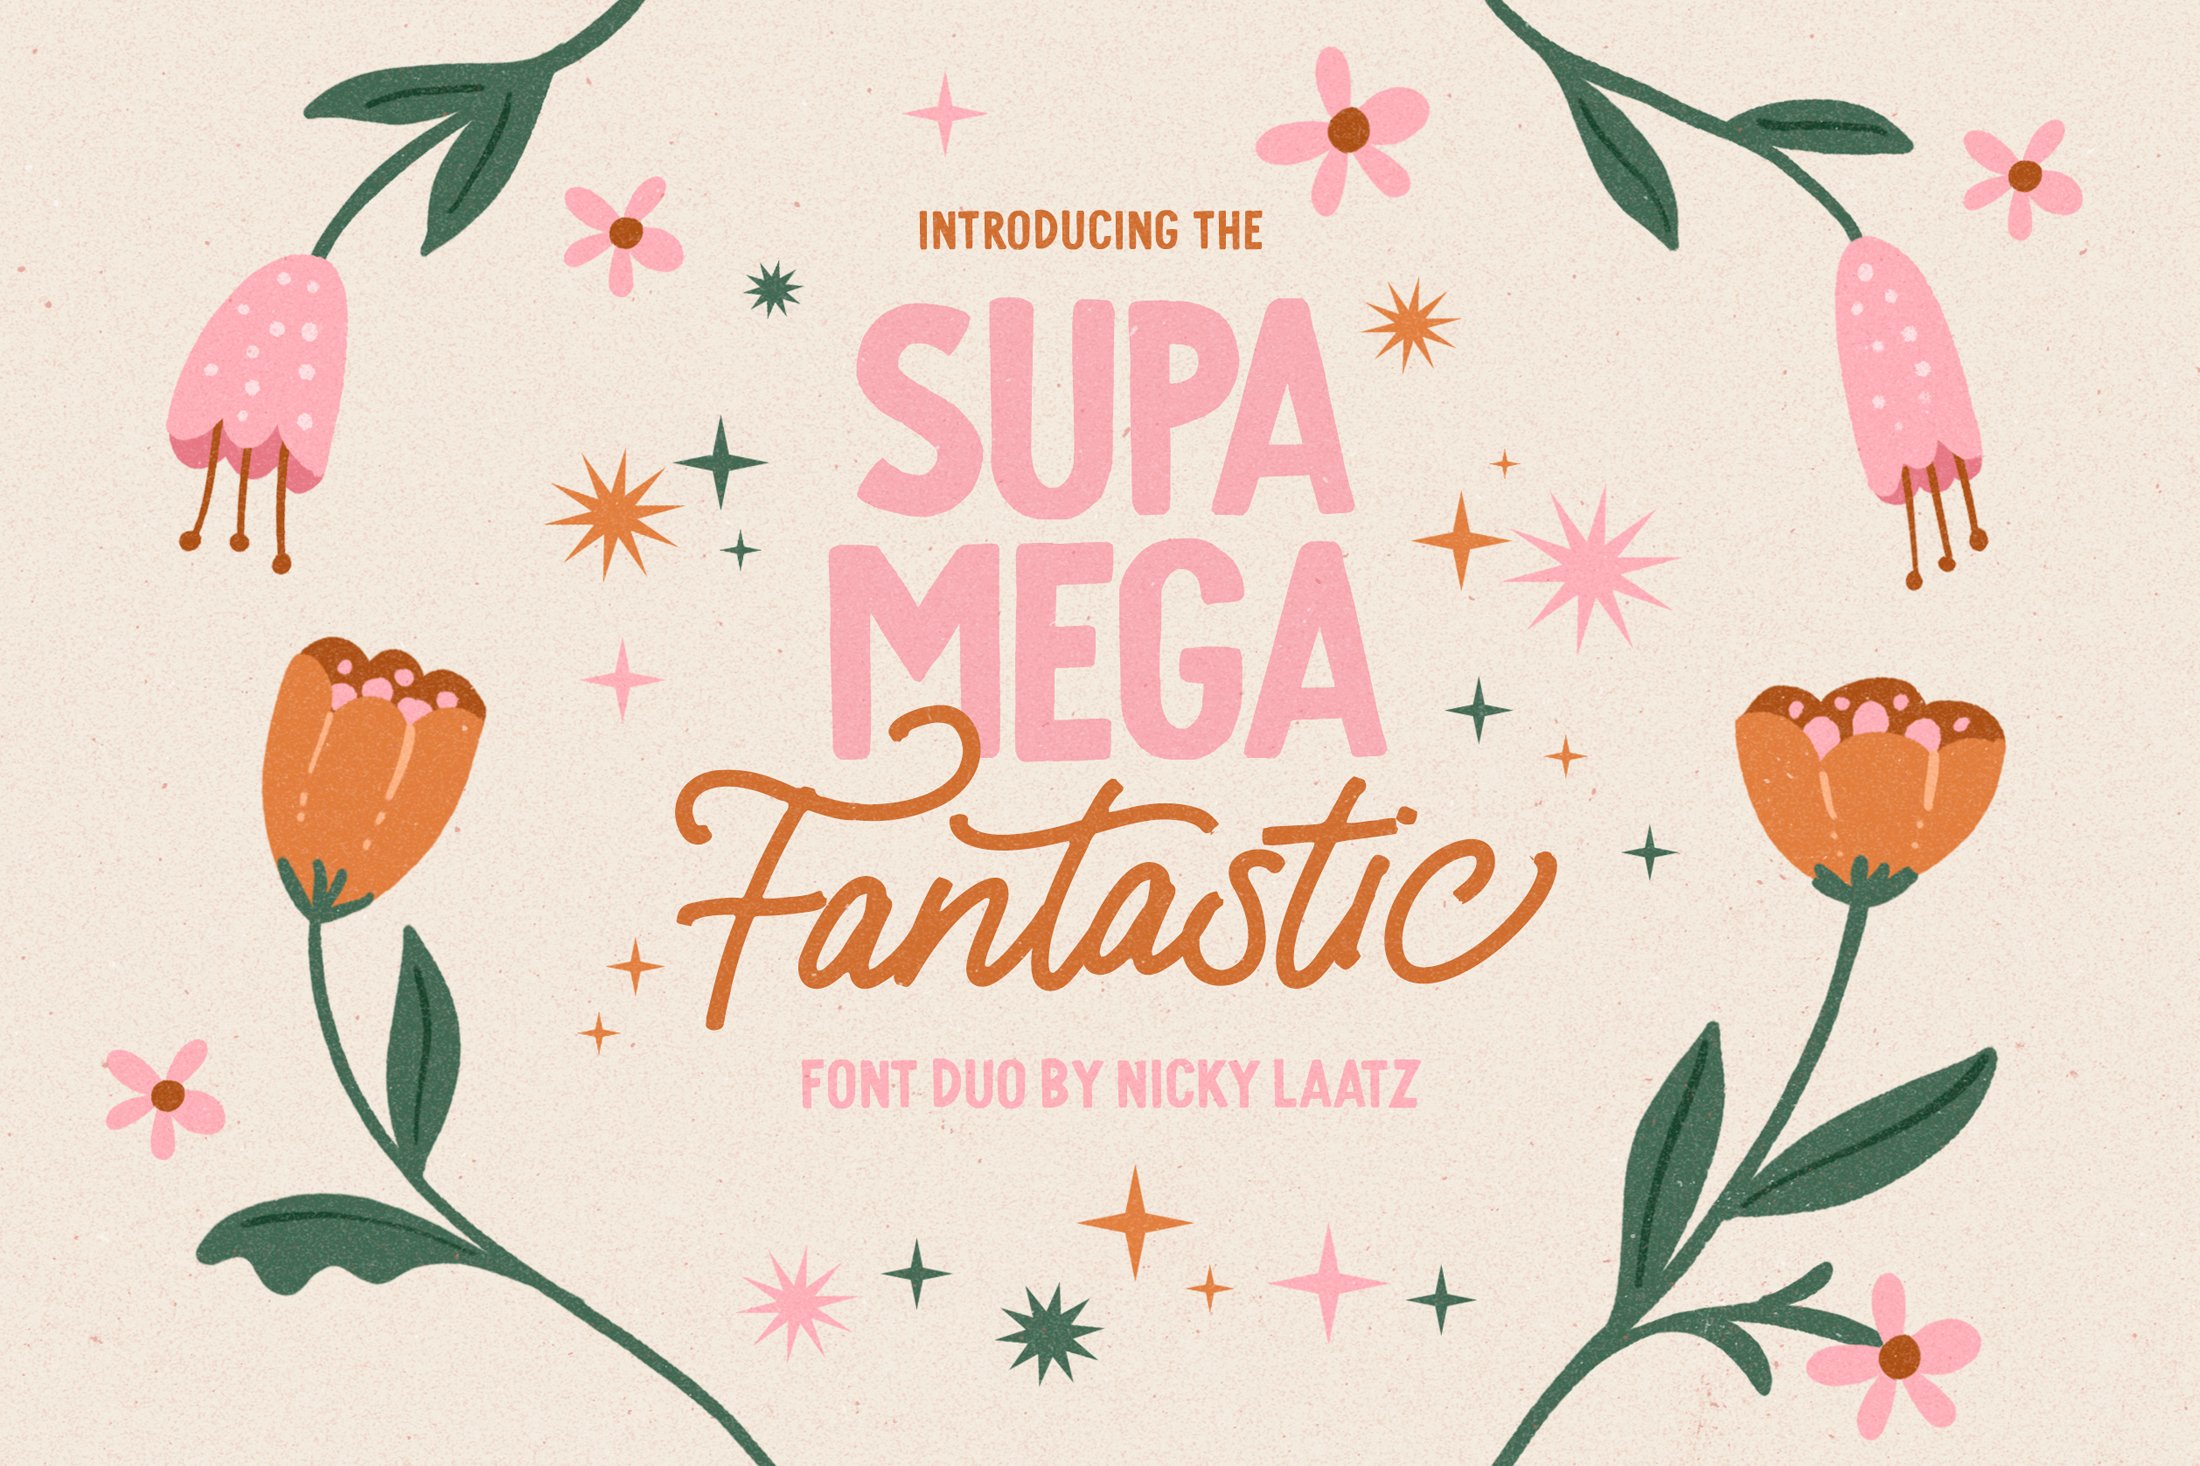 Supa Mega Fantastic Font Duo cover image.